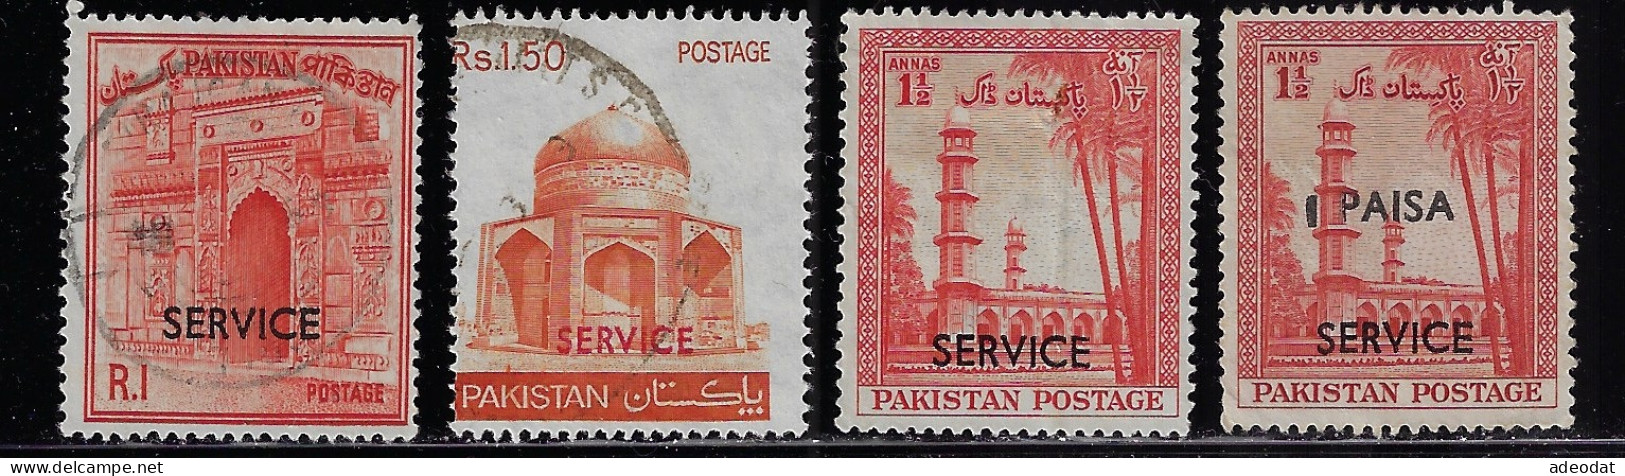 PAKISTAN  1961  SERVICE  SCOTT # O76,O79,O82  MNH. CV $0.80 - Pakistan